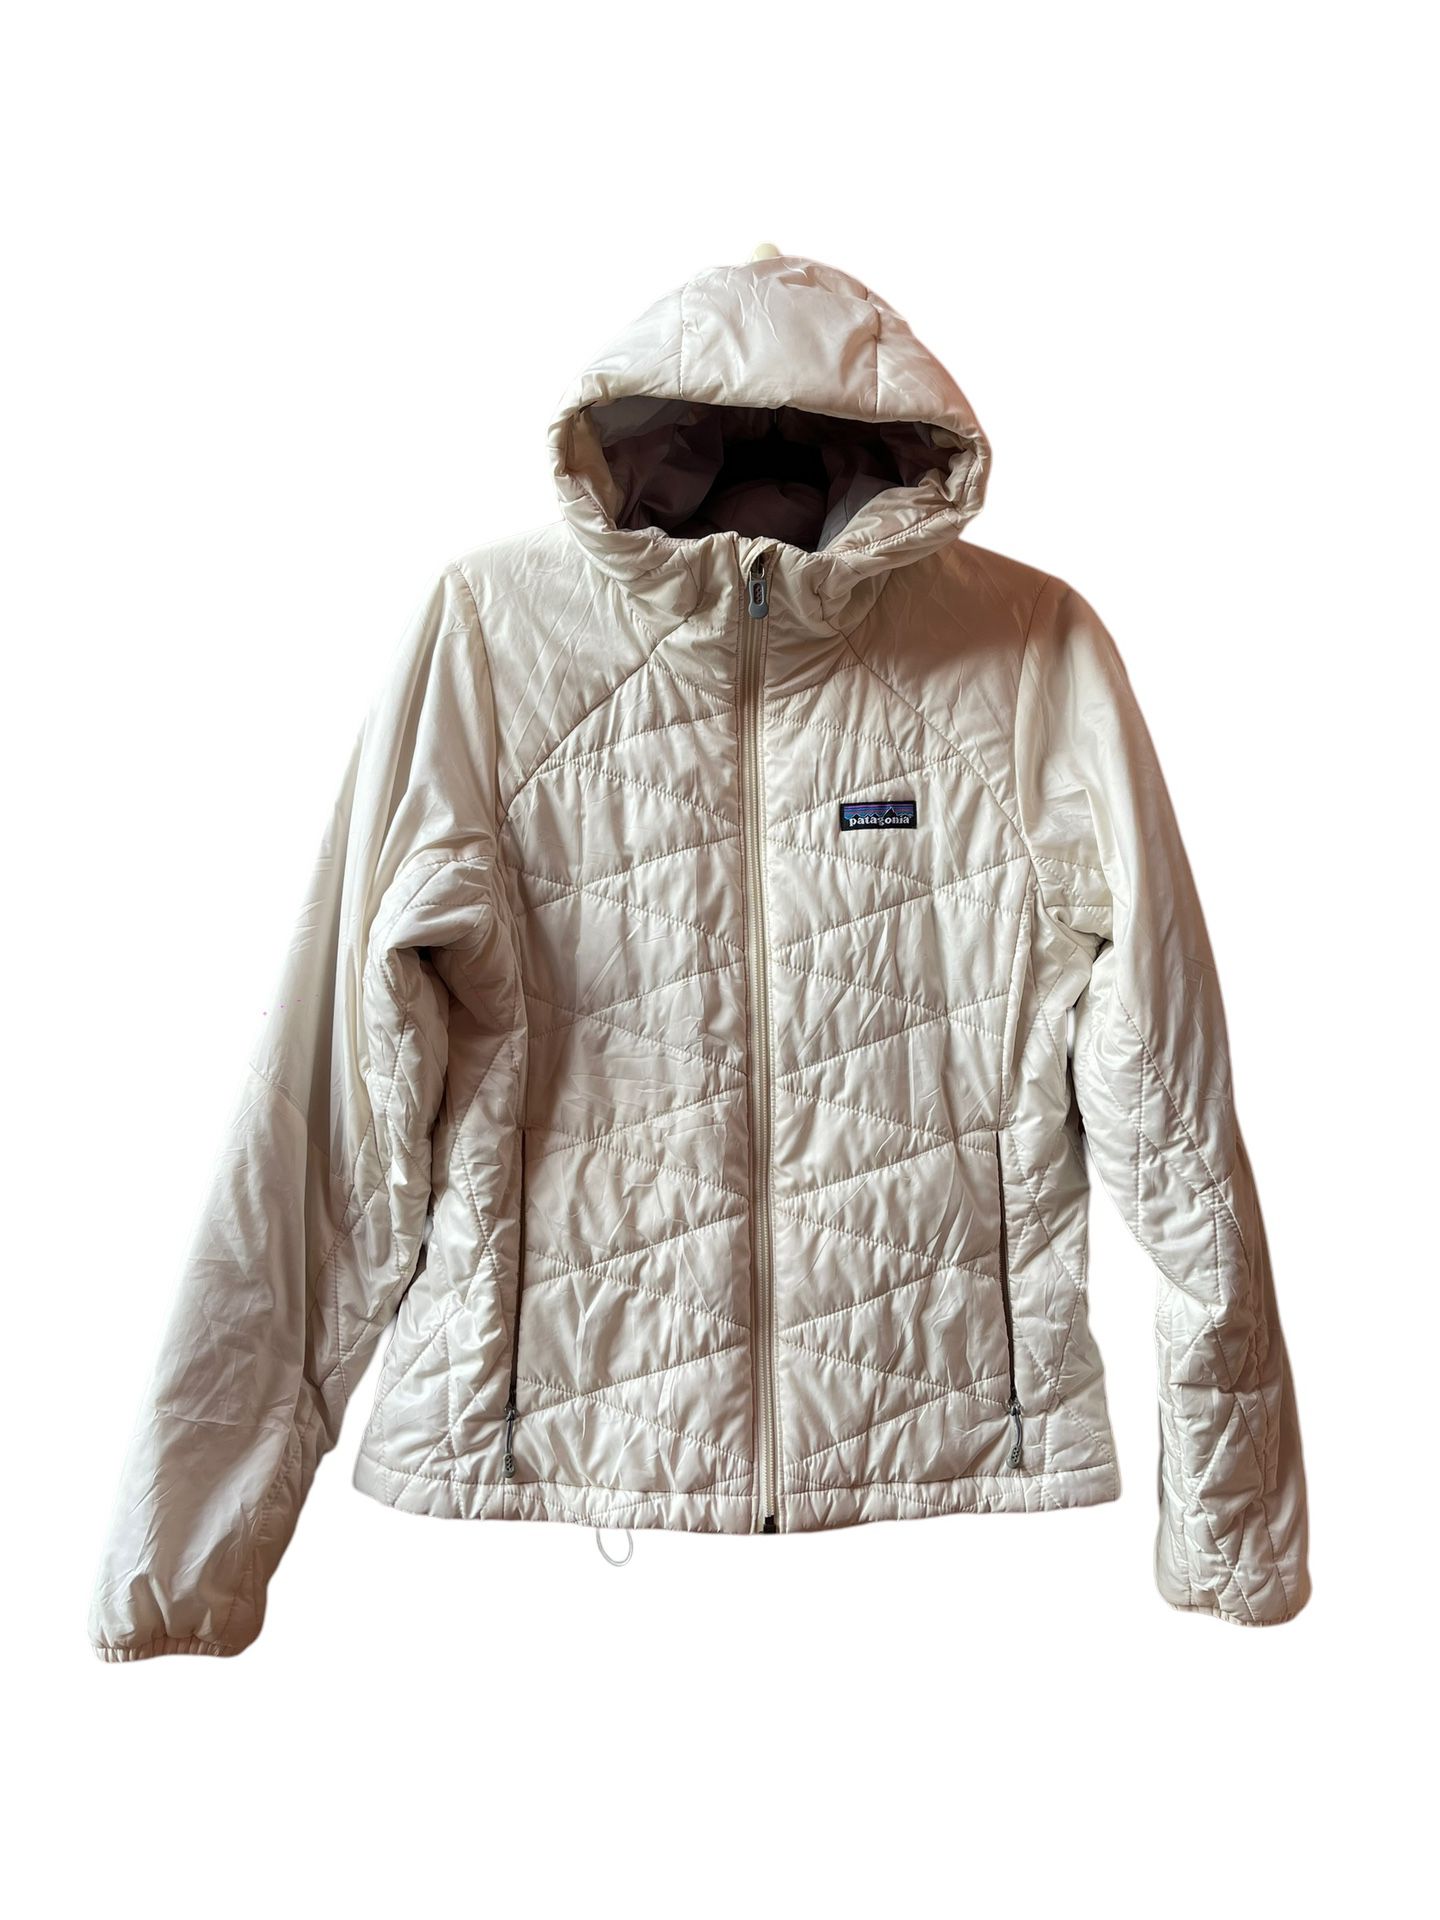 Patagonia Women's Nano Puff Jacket Full Zip White Primaloft Packable S